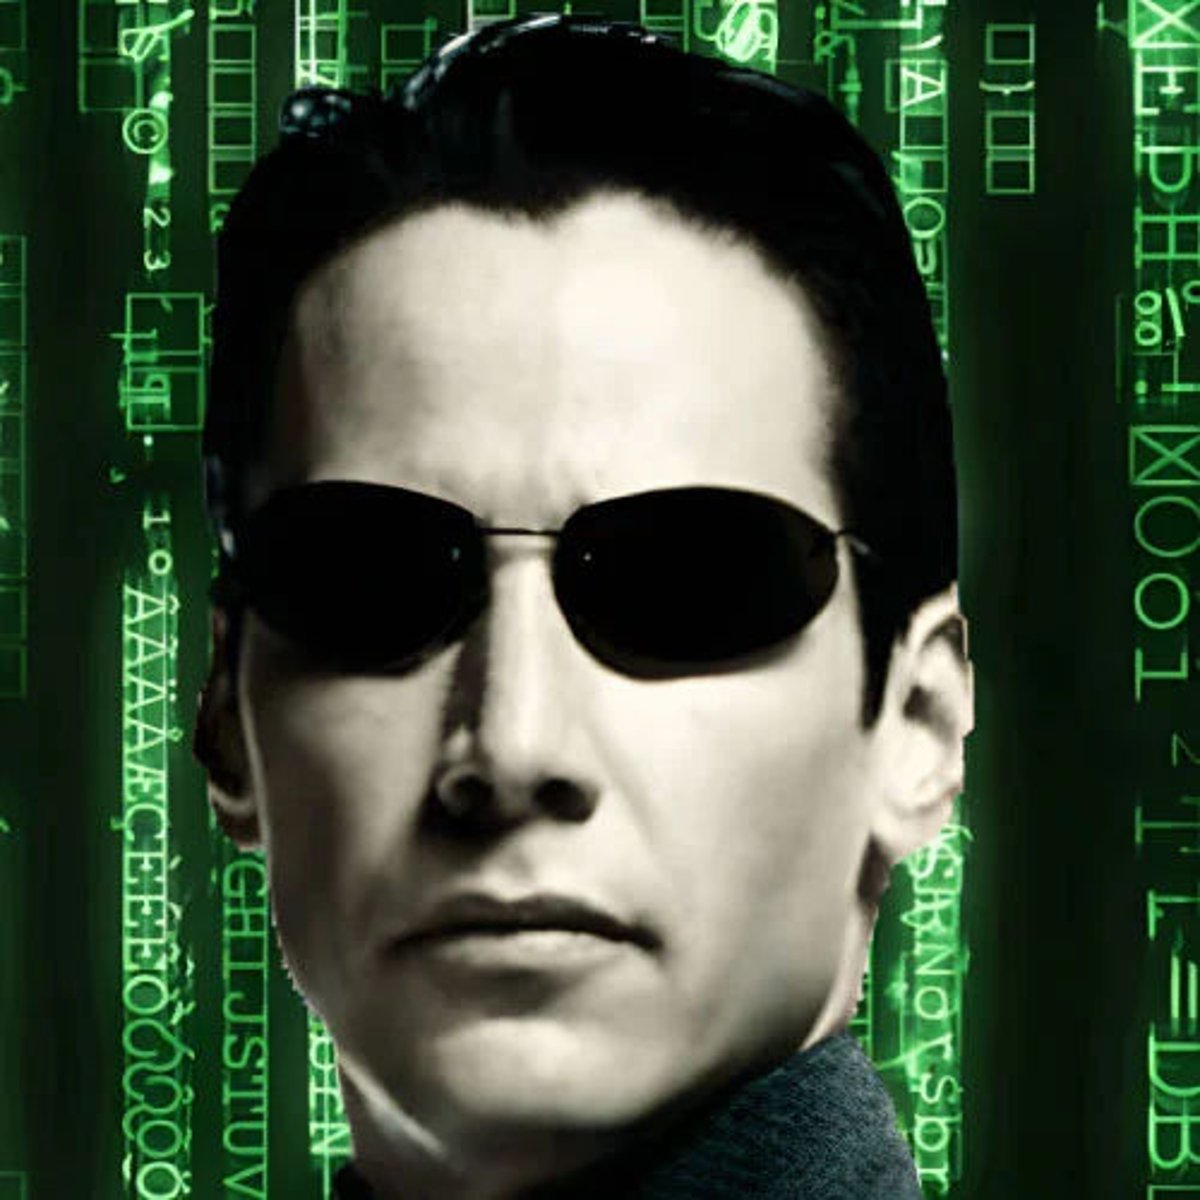 Neo(Matrix)